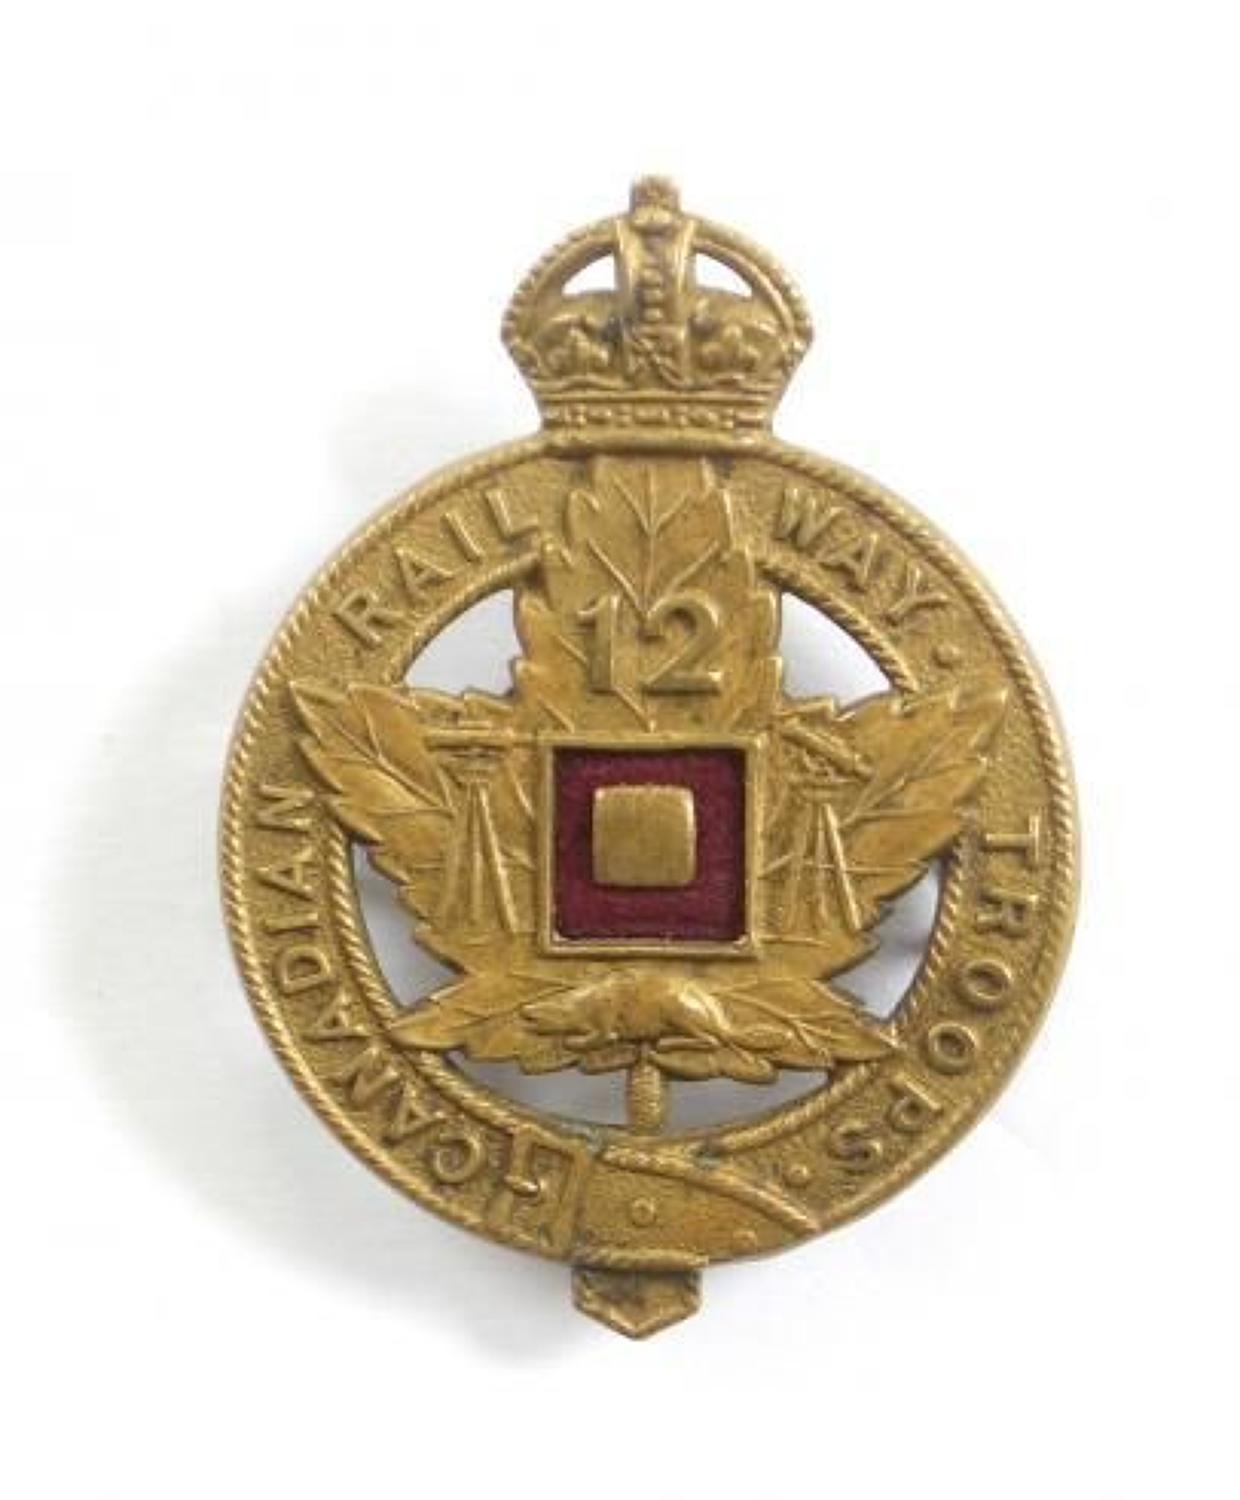 Canadian 12th Railway Troops CEF bronze cap badge by JR Gaunt, London.